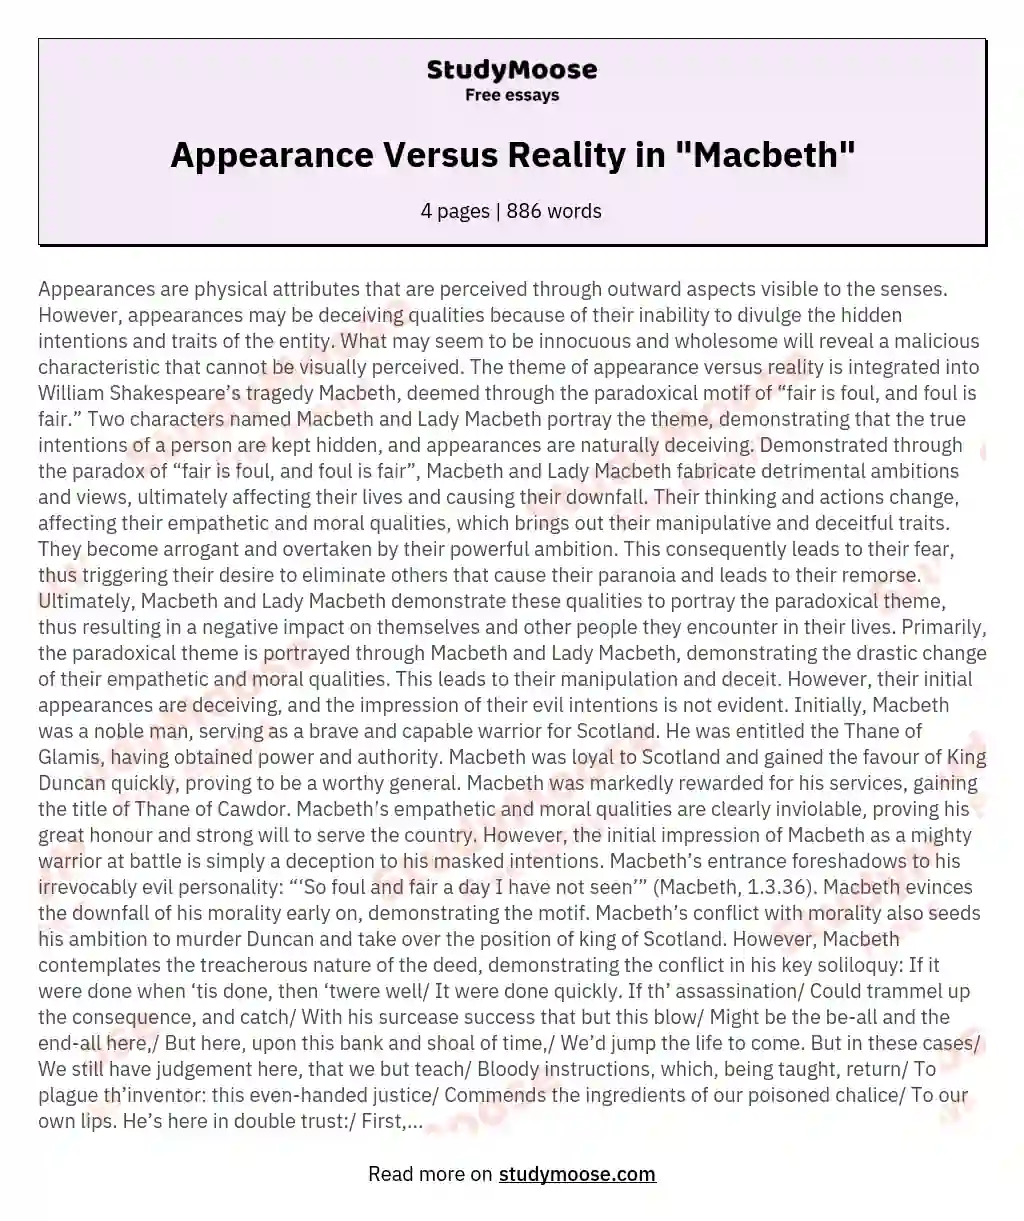 Appearance Versus Reality in "Macbeth"